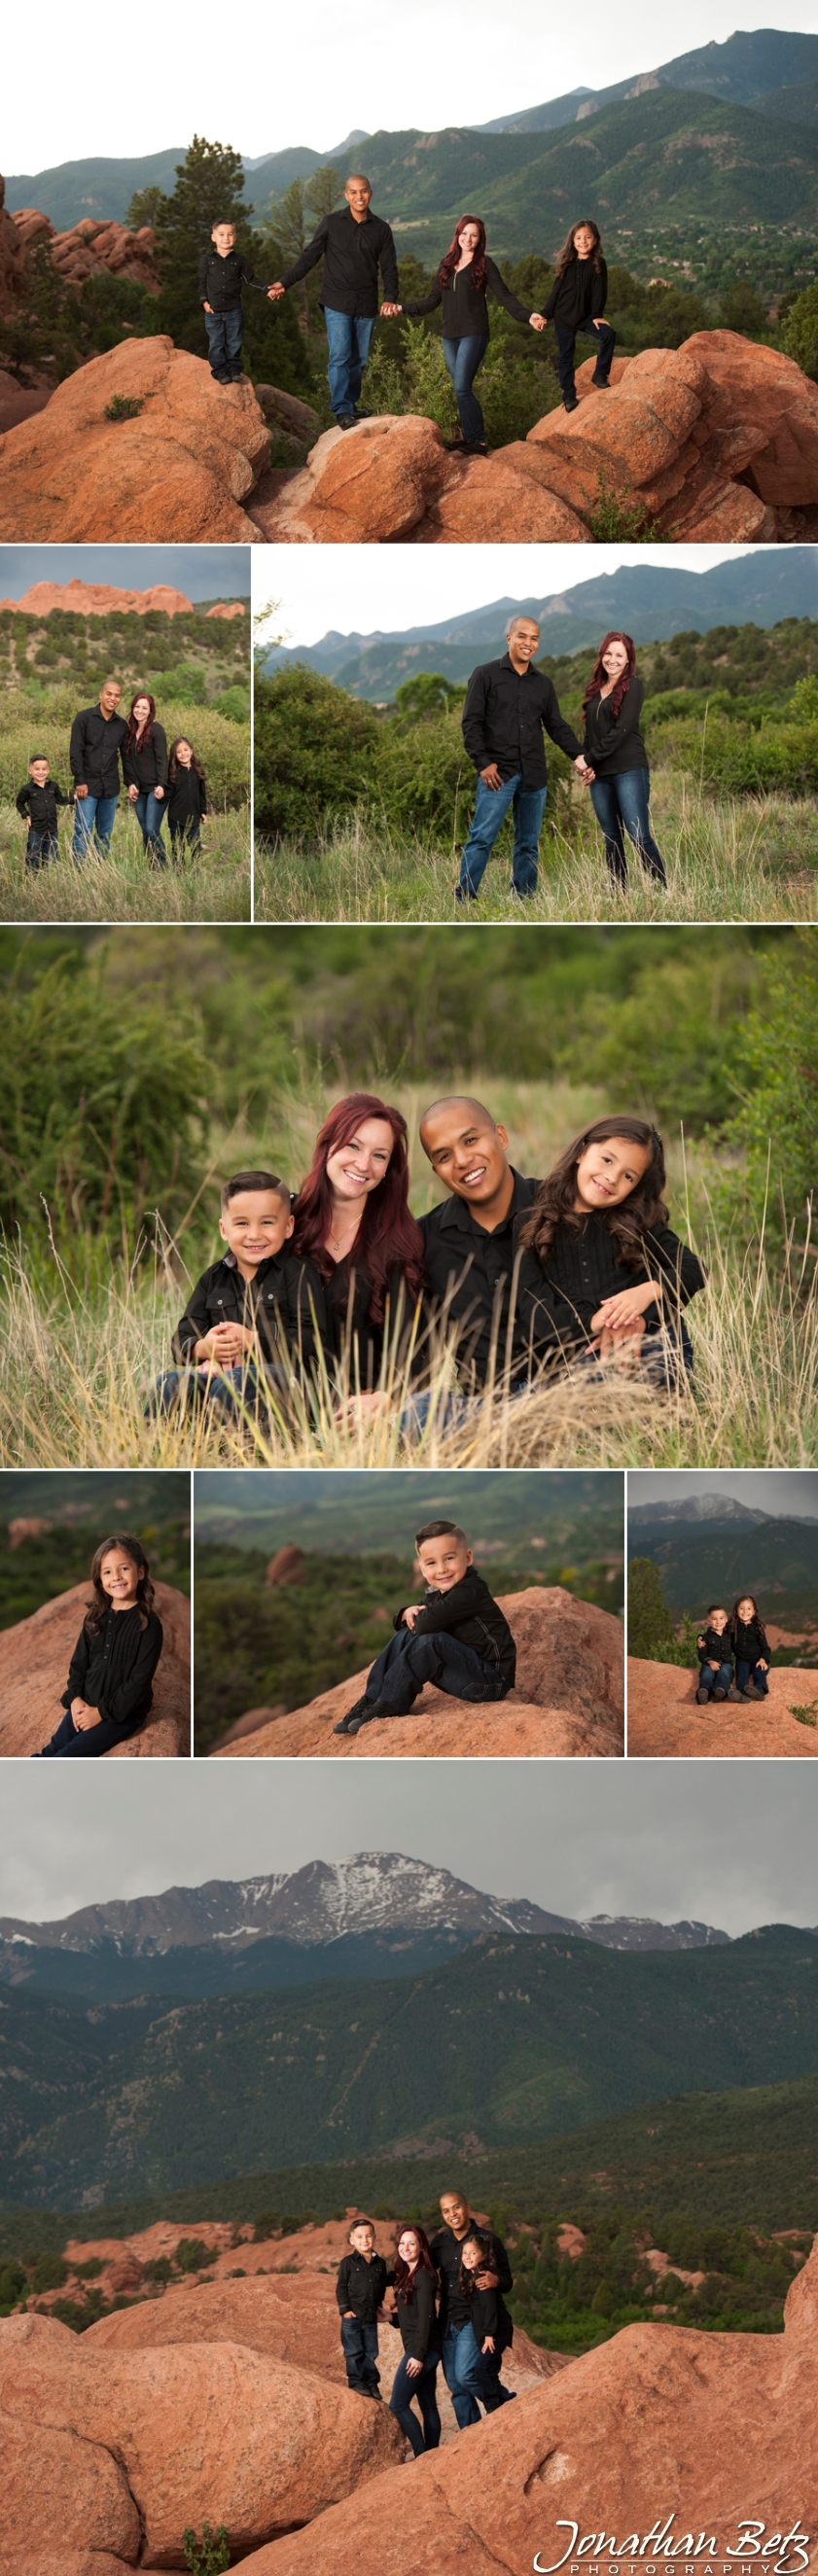 Colorado Springs Outdoor Family Portraits Photographer